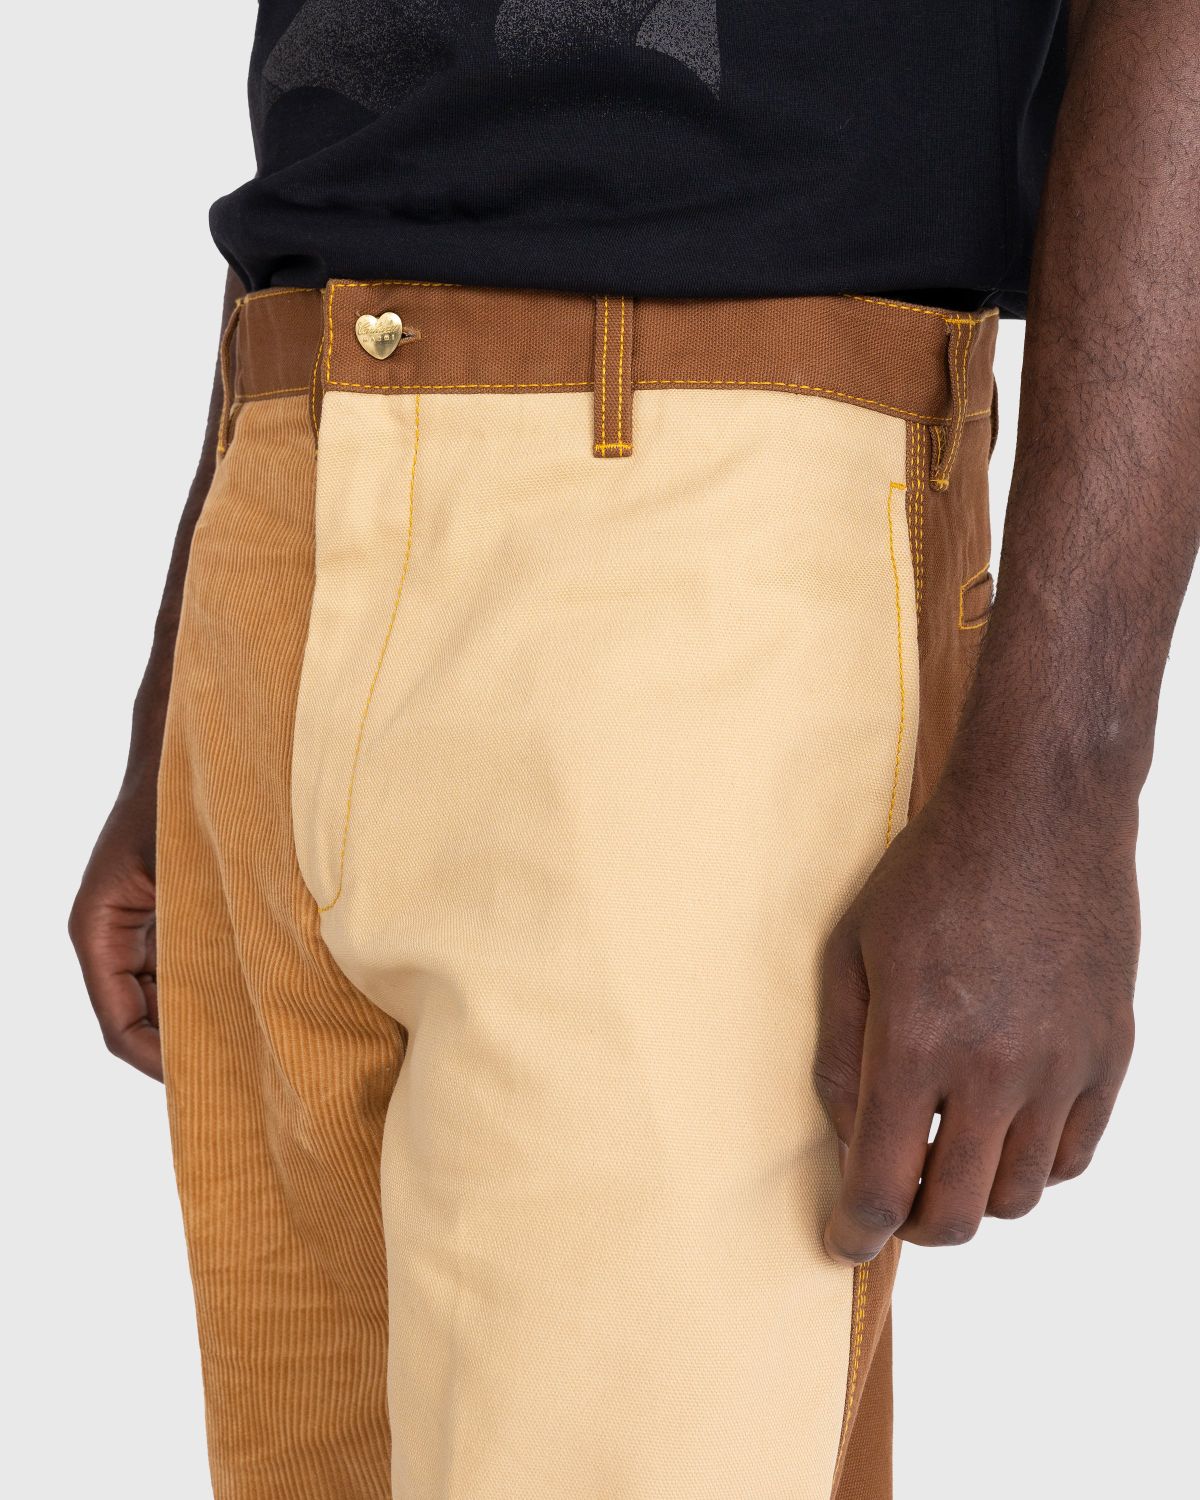 Marni x Carhartt WIP – Colorblocked Trousers Brown - Pants - Brown - Image 6